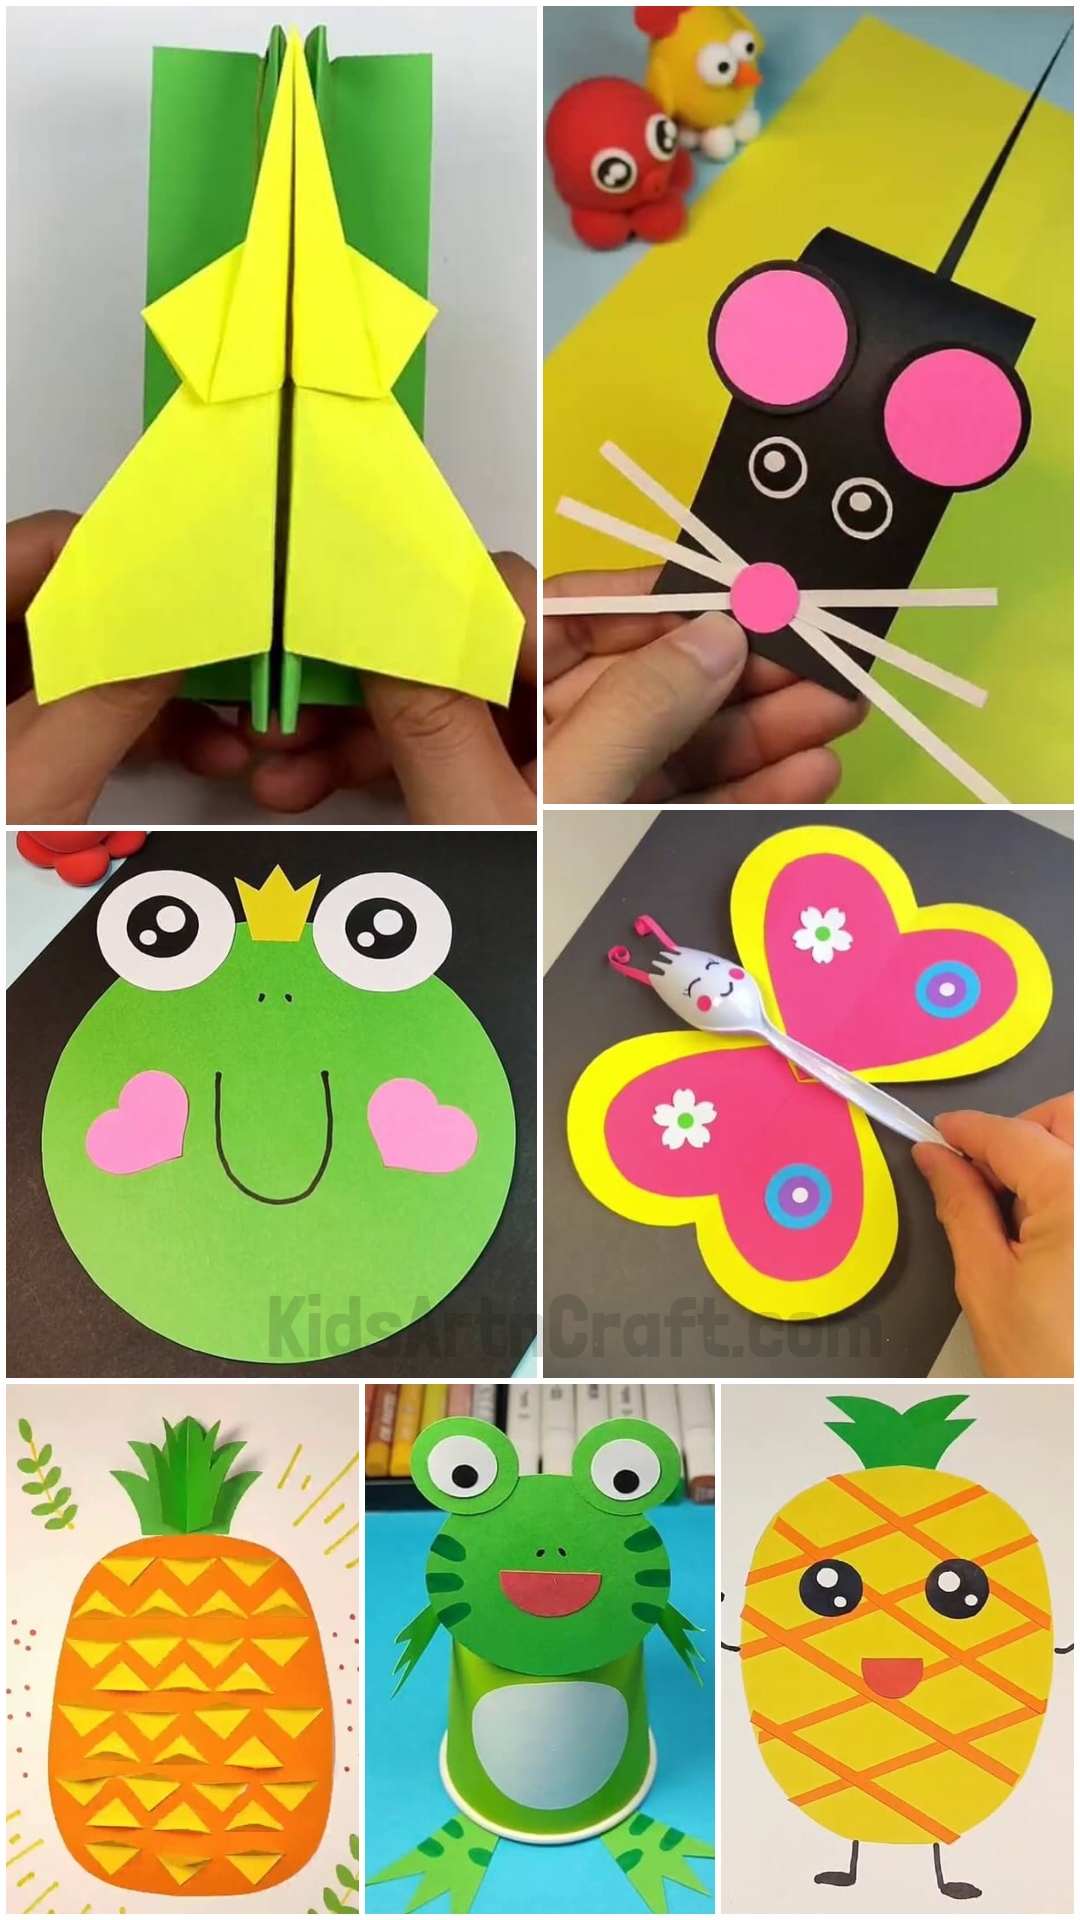 DIY Fun To Make Paper Craft Ideas for Kids